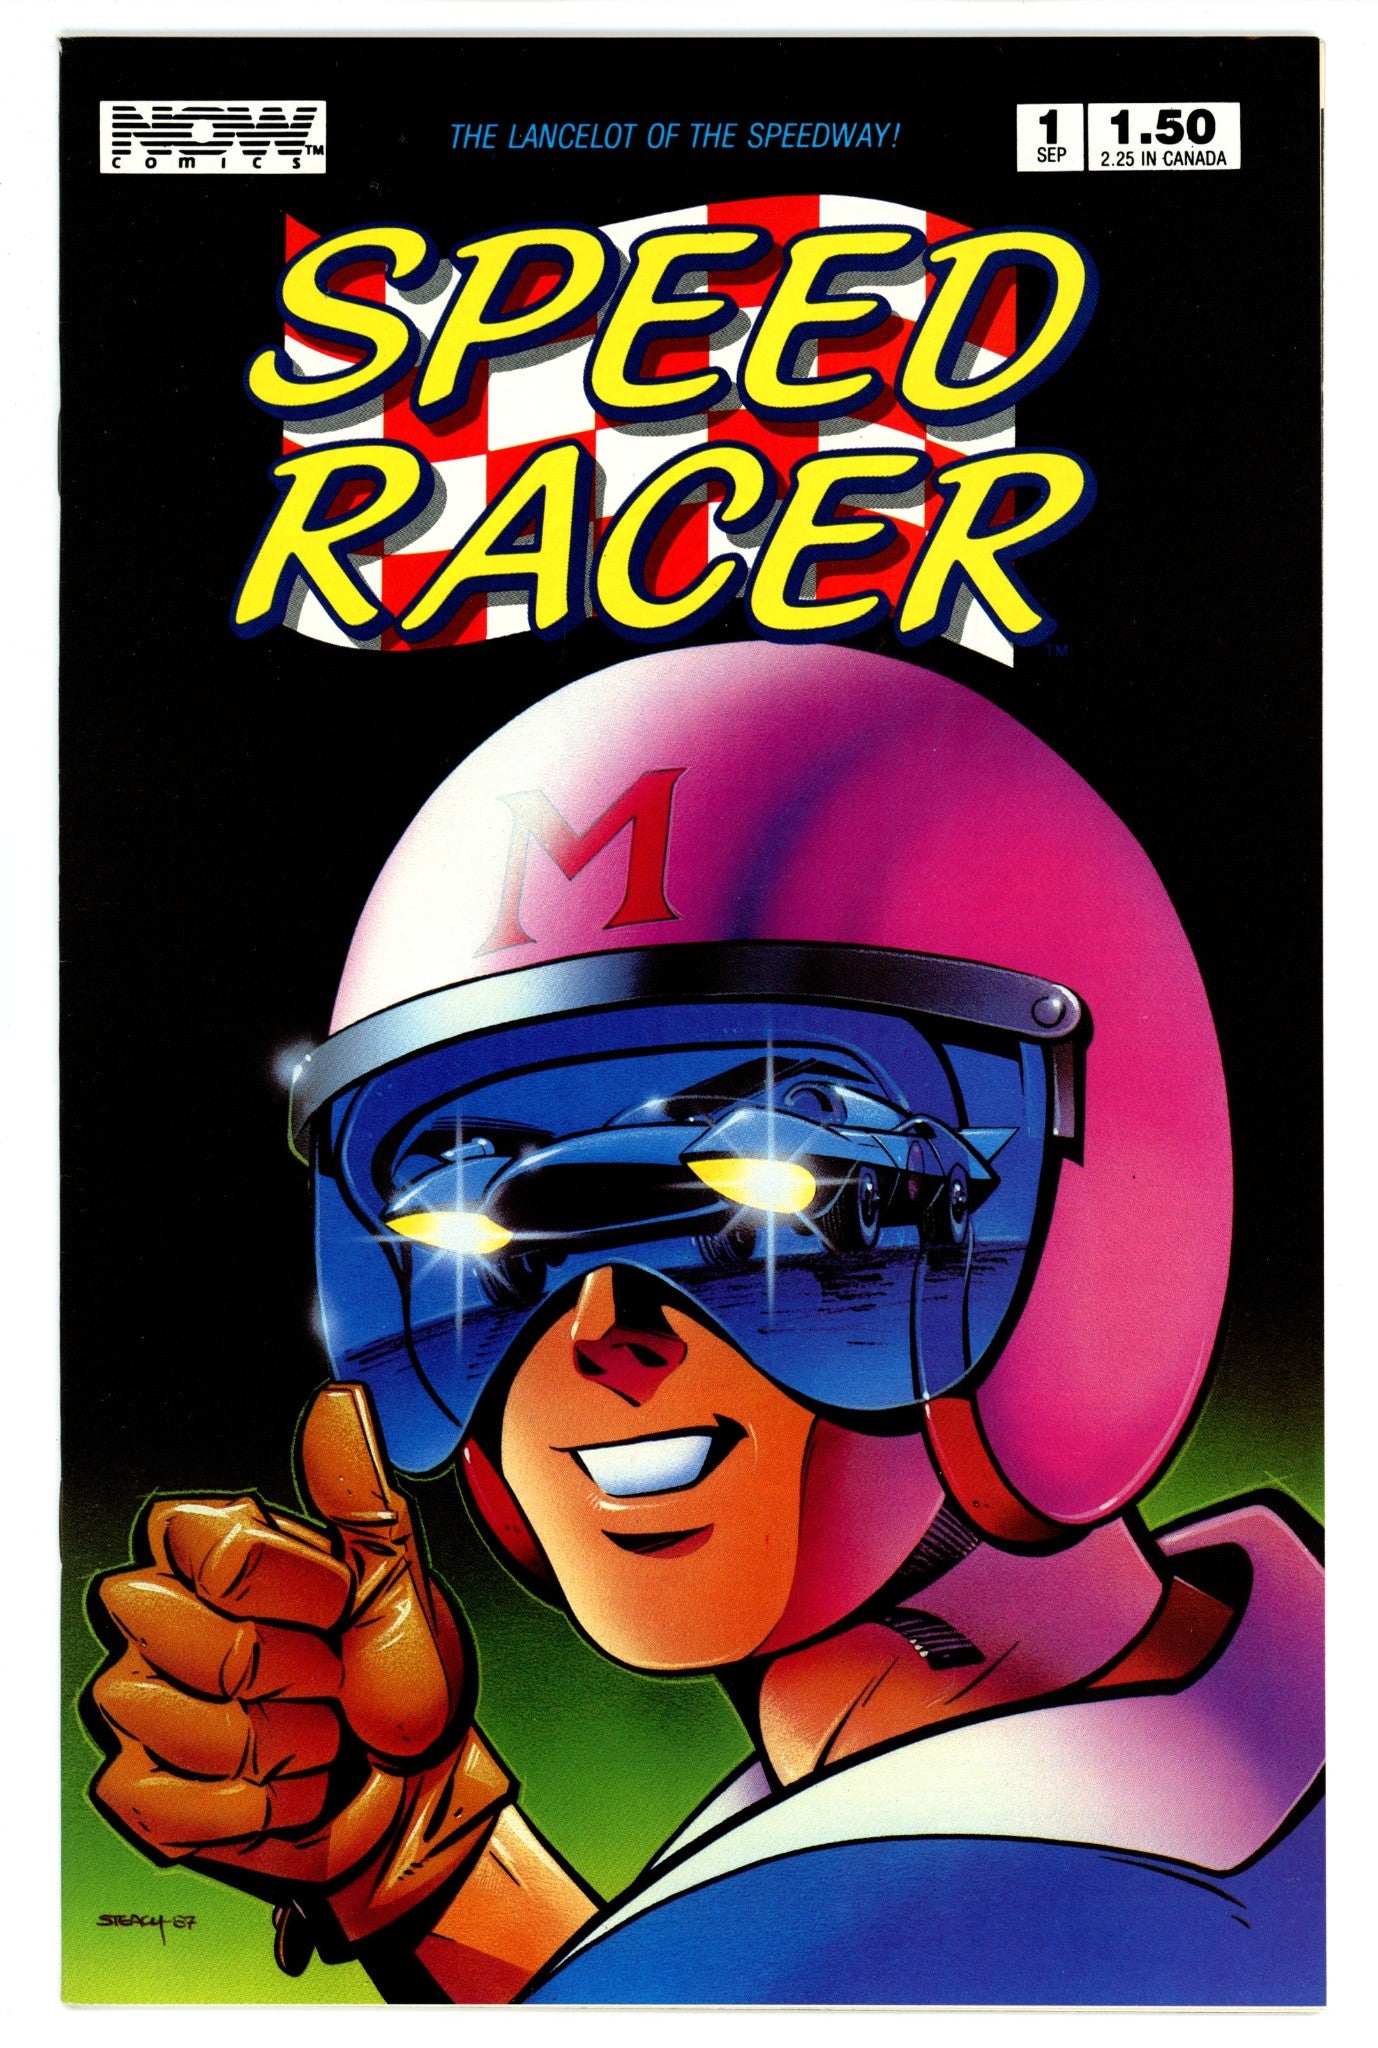 Speed Racer Vol 1 1 VF/NM (9.0) (1987) 